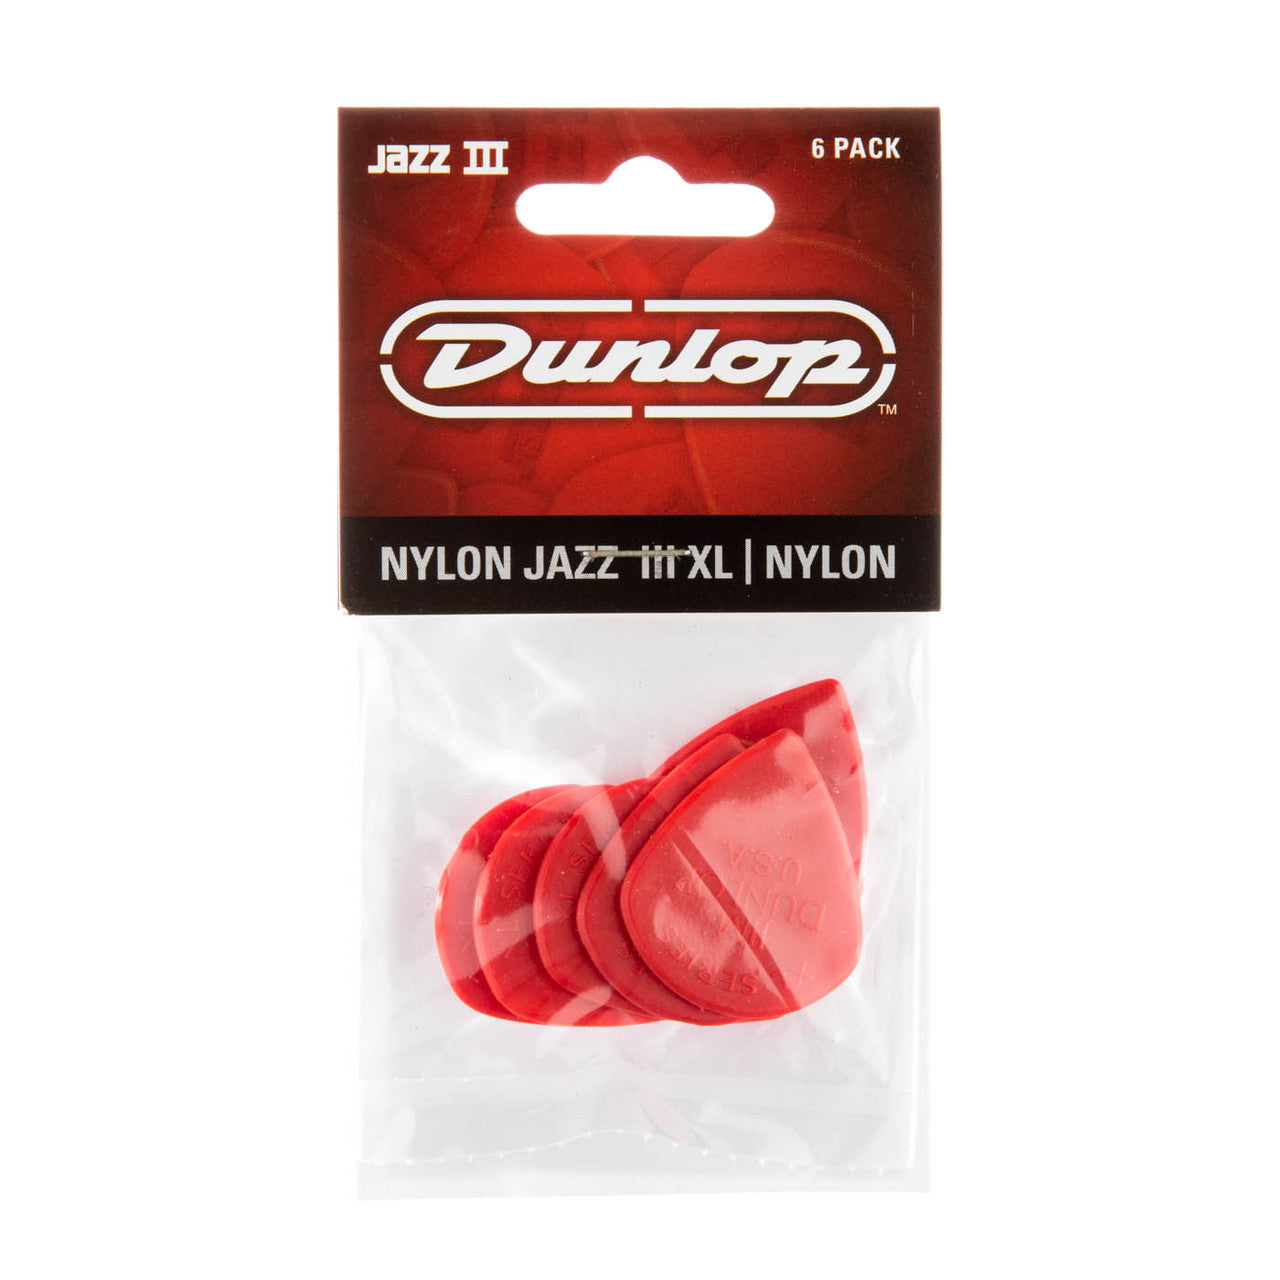 Dunlop Nylon Jazz III XL Picks (6 Pack)